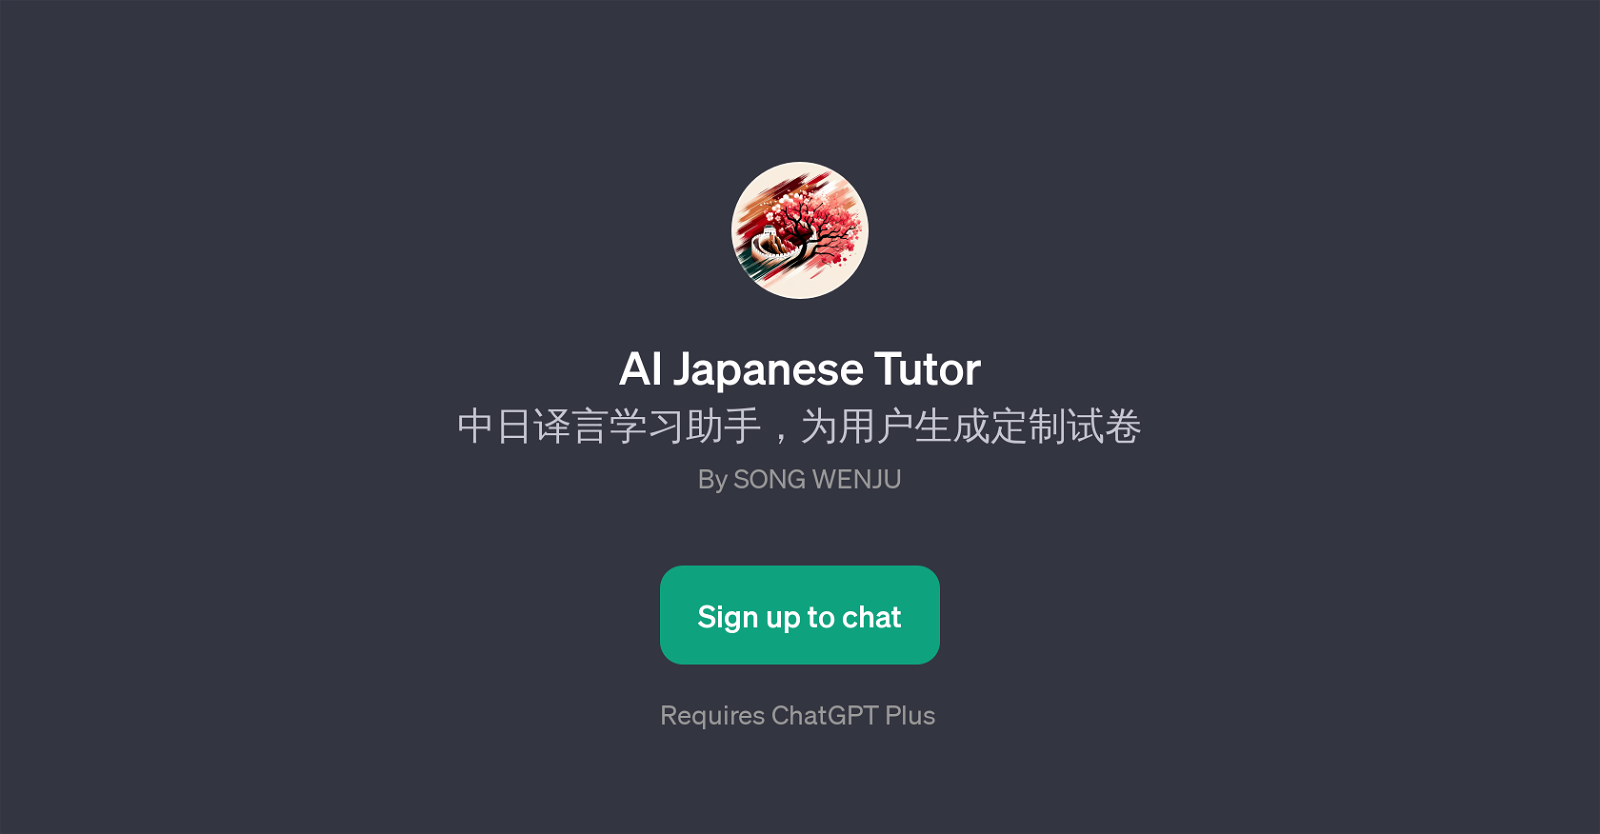 AI Japanese Tutor website